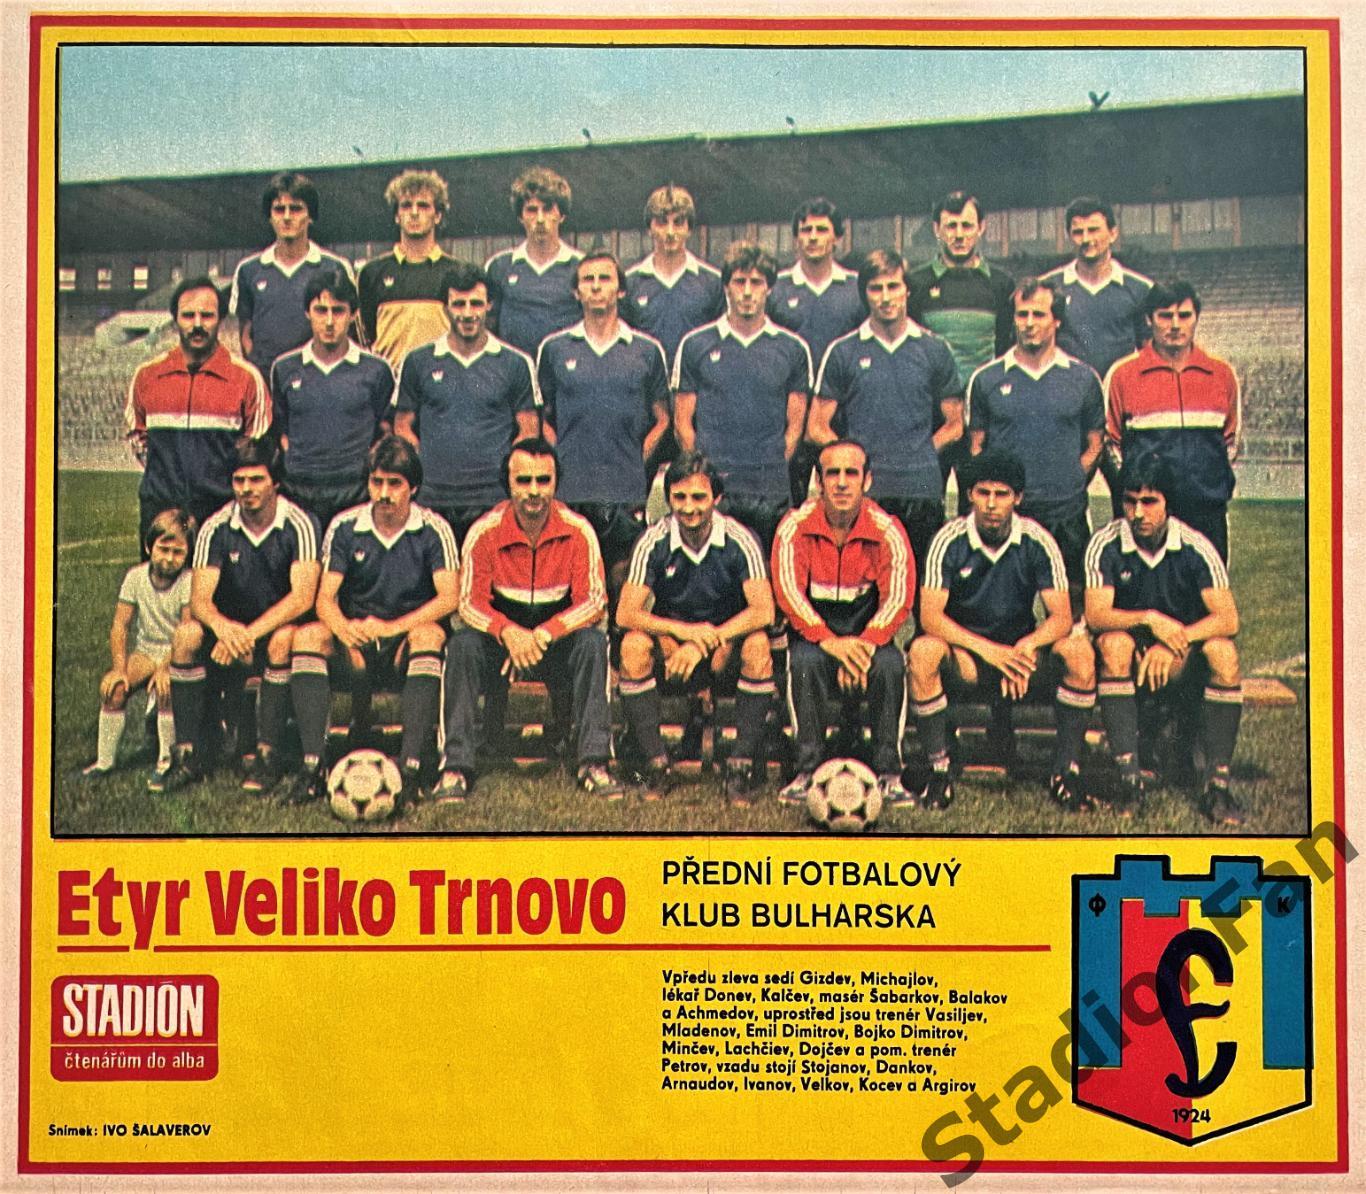 Постер из журнала Стадион (Stadion) - ETYR Veliko Trnovo, 1984.